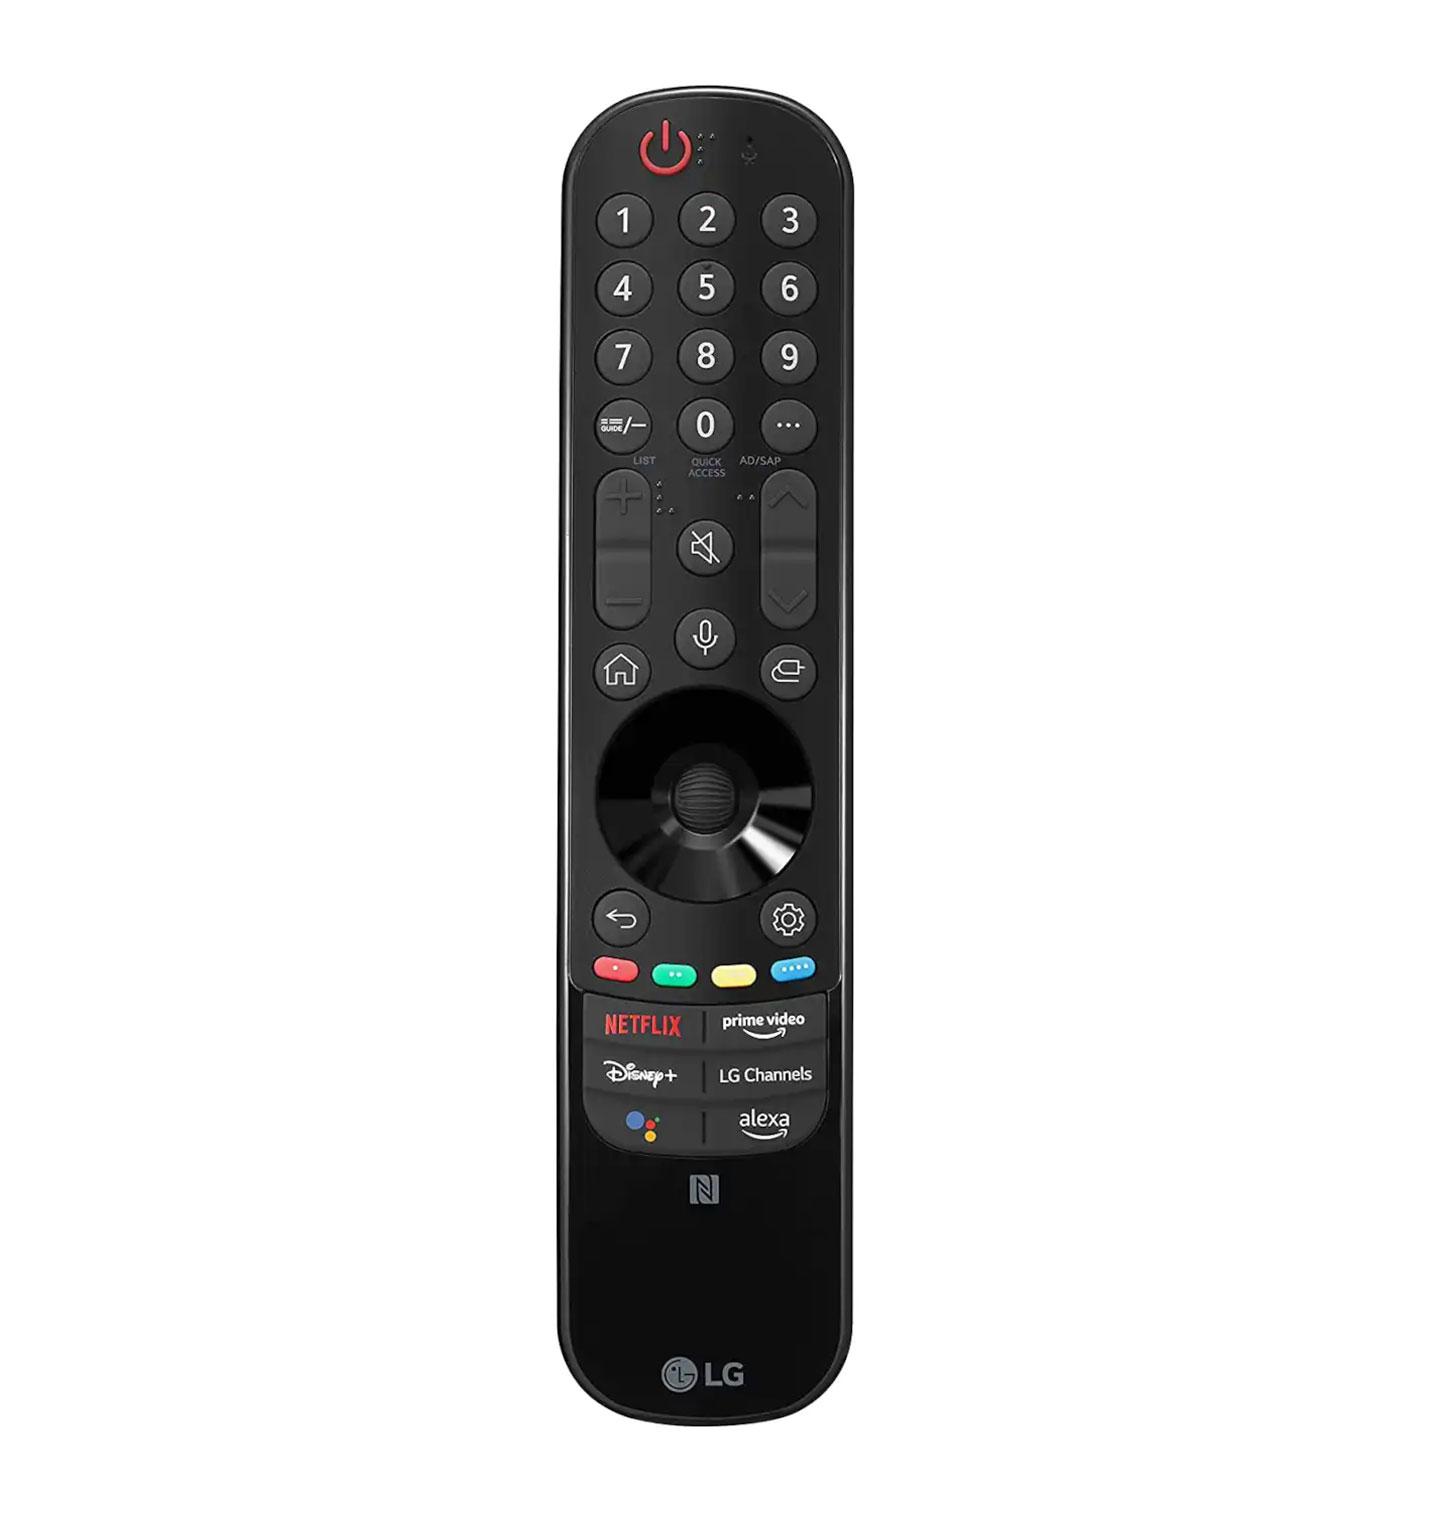 LG OLED evo G2 零間隙藝廊系列配備的智慧滑鼠遙控器，配上 webOS 作系統可以更直覺地執行各項操控，快速找到想要的功能。外這組智慧滑鼠遙控器也整合了智慧語音功能，可透過語音搜尋想看的影音內容、或利用語音控制 IOT 物聯網家電裝置。